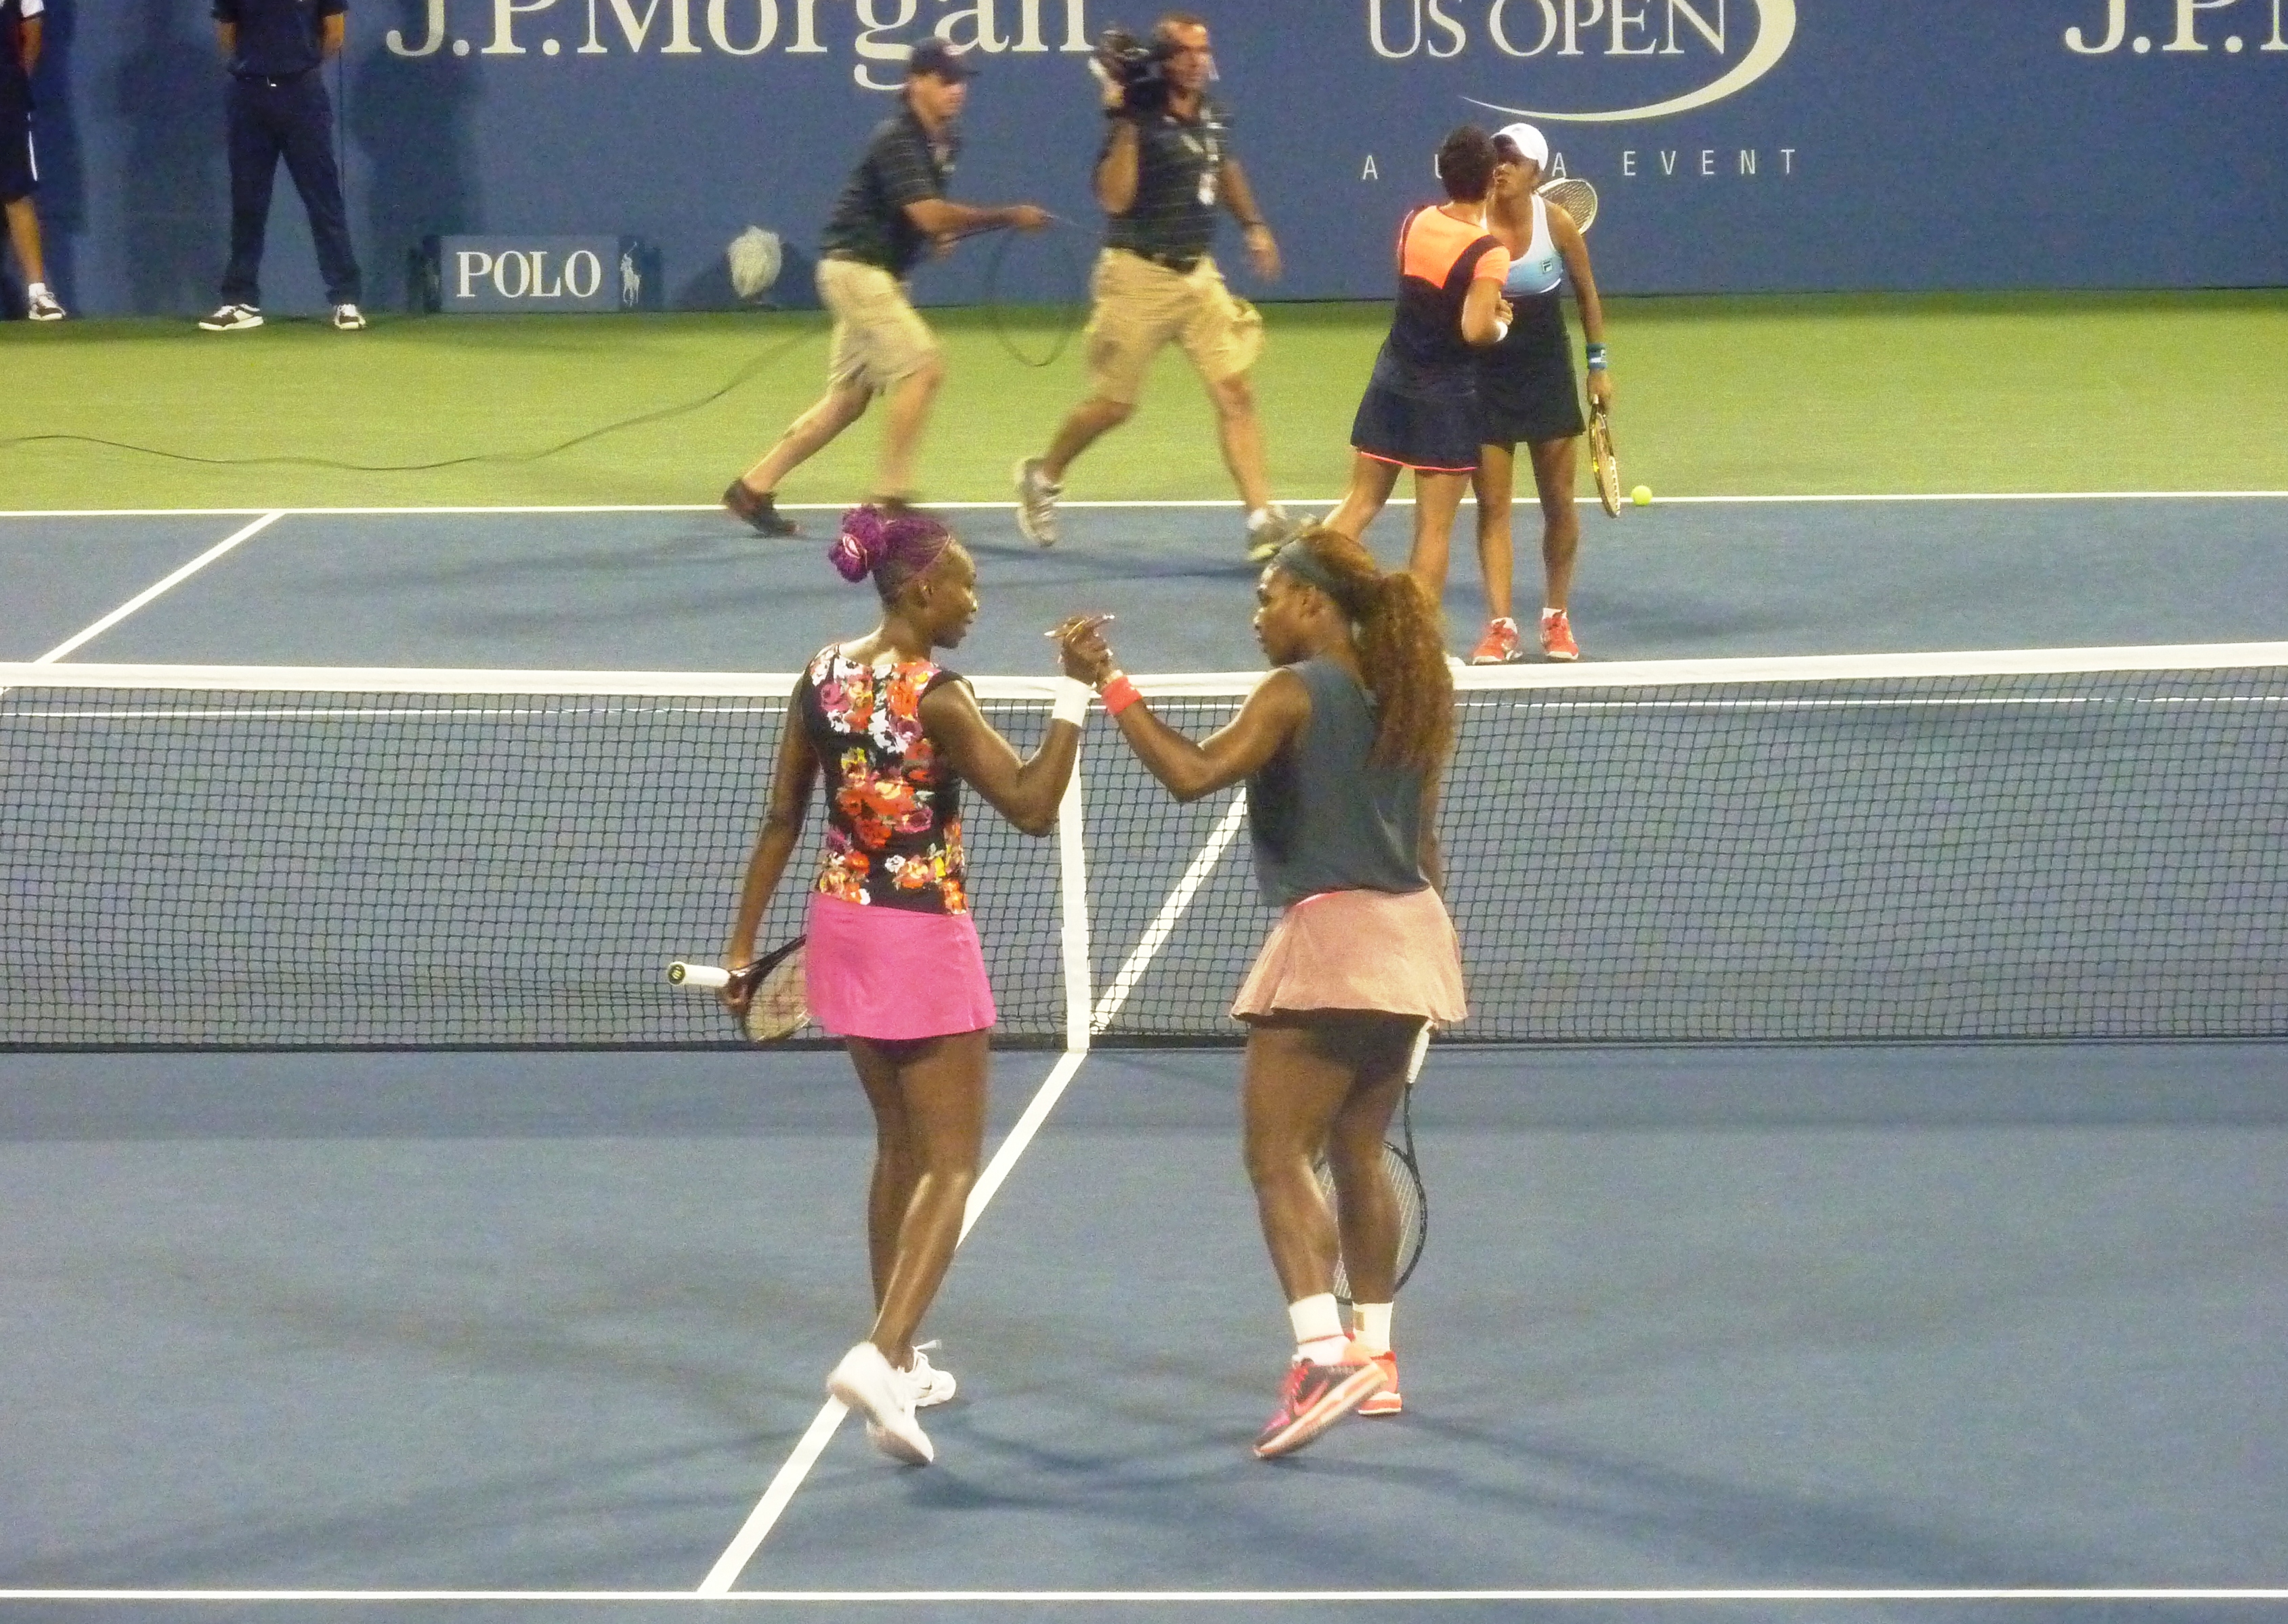 Serena Venus win